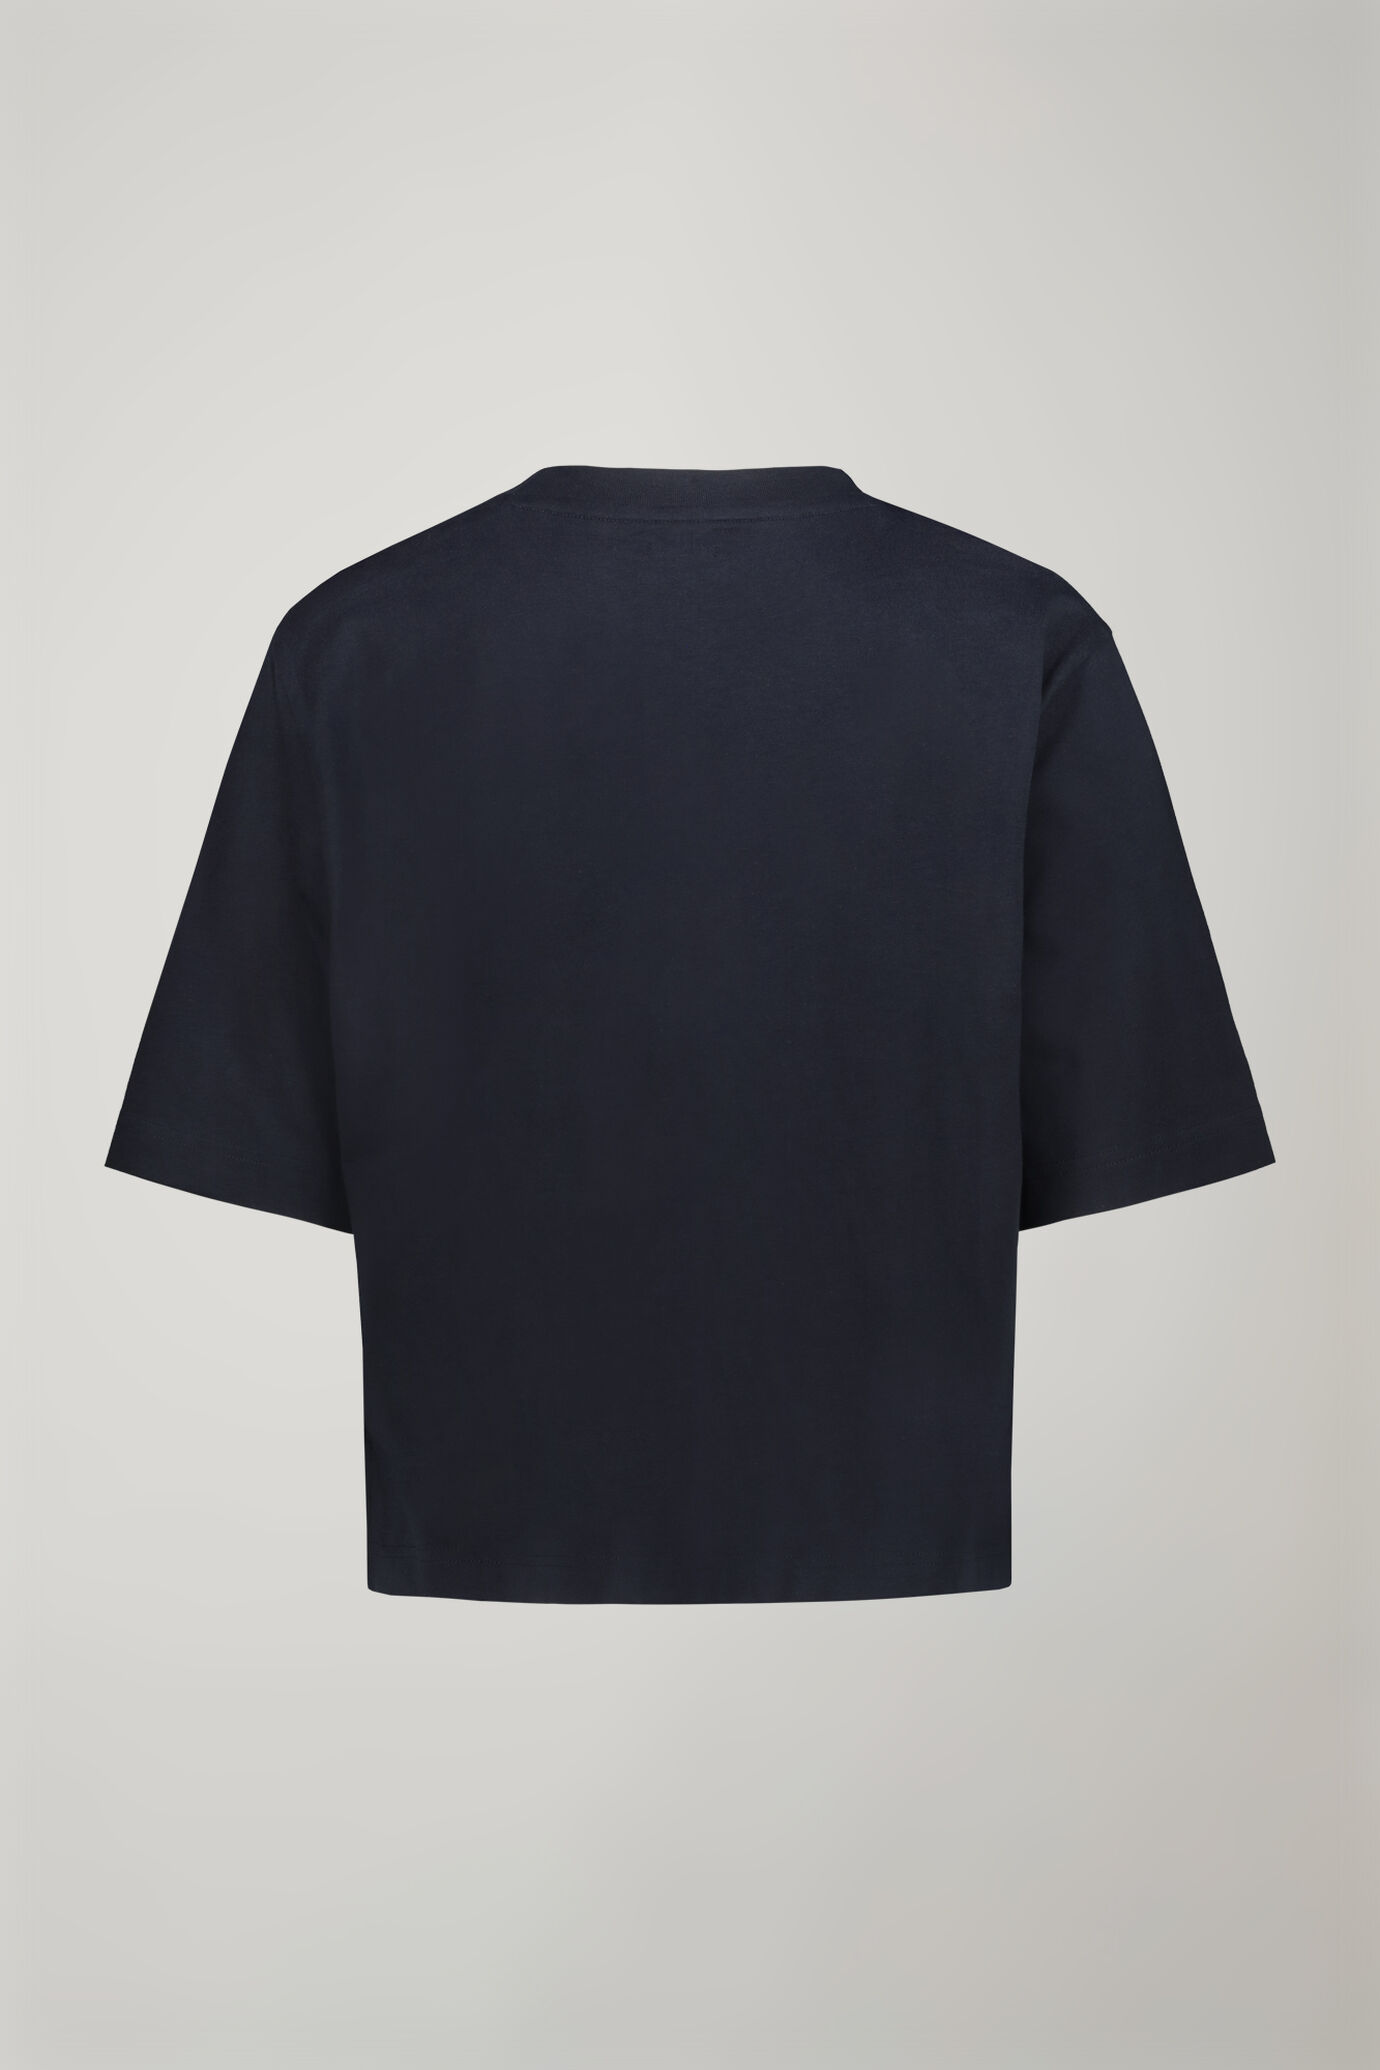 Women’s round neck t-shirt 100% cotton regular fit image number 6